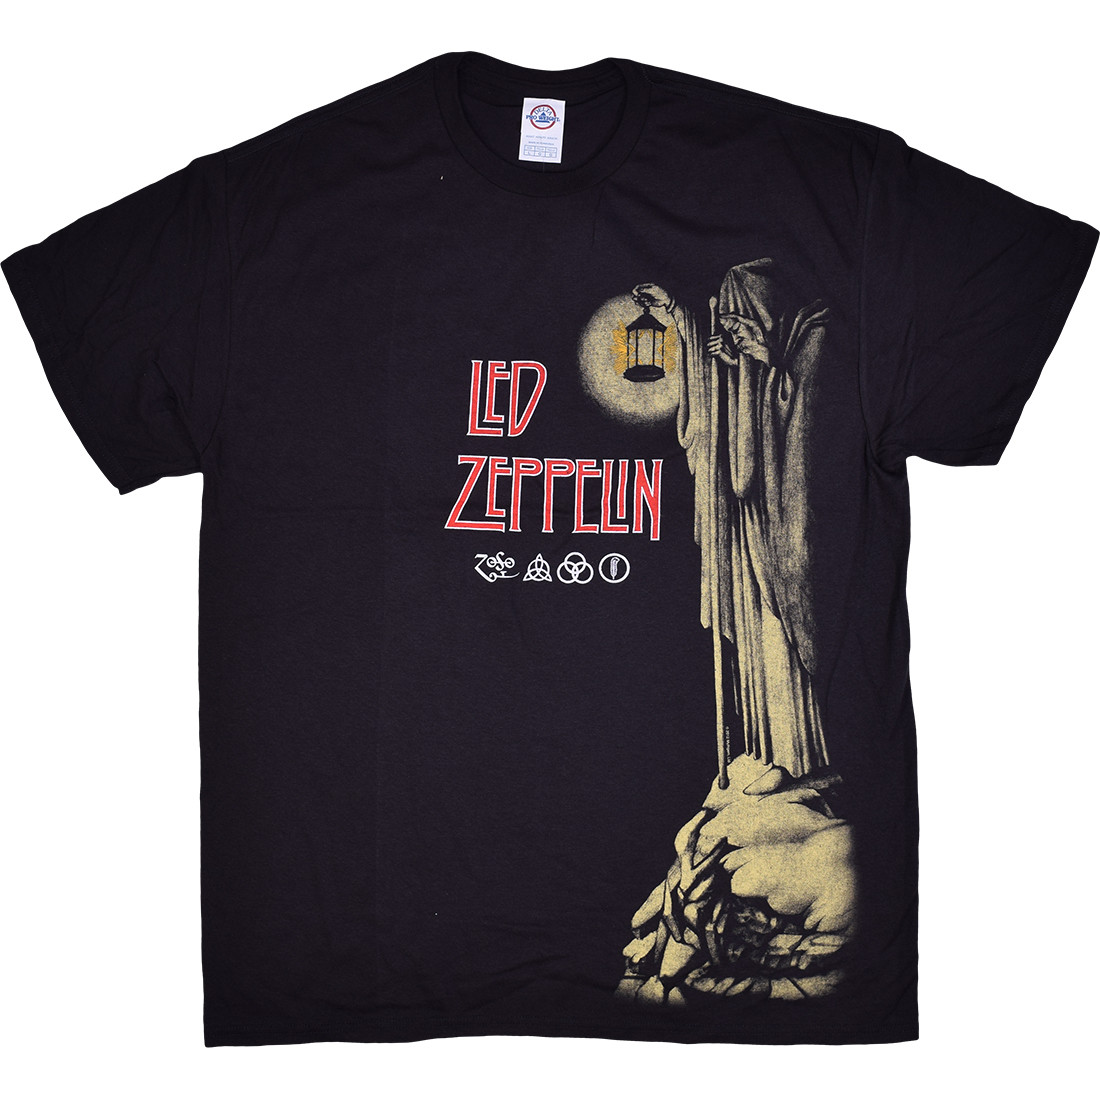 led zeplin shirt